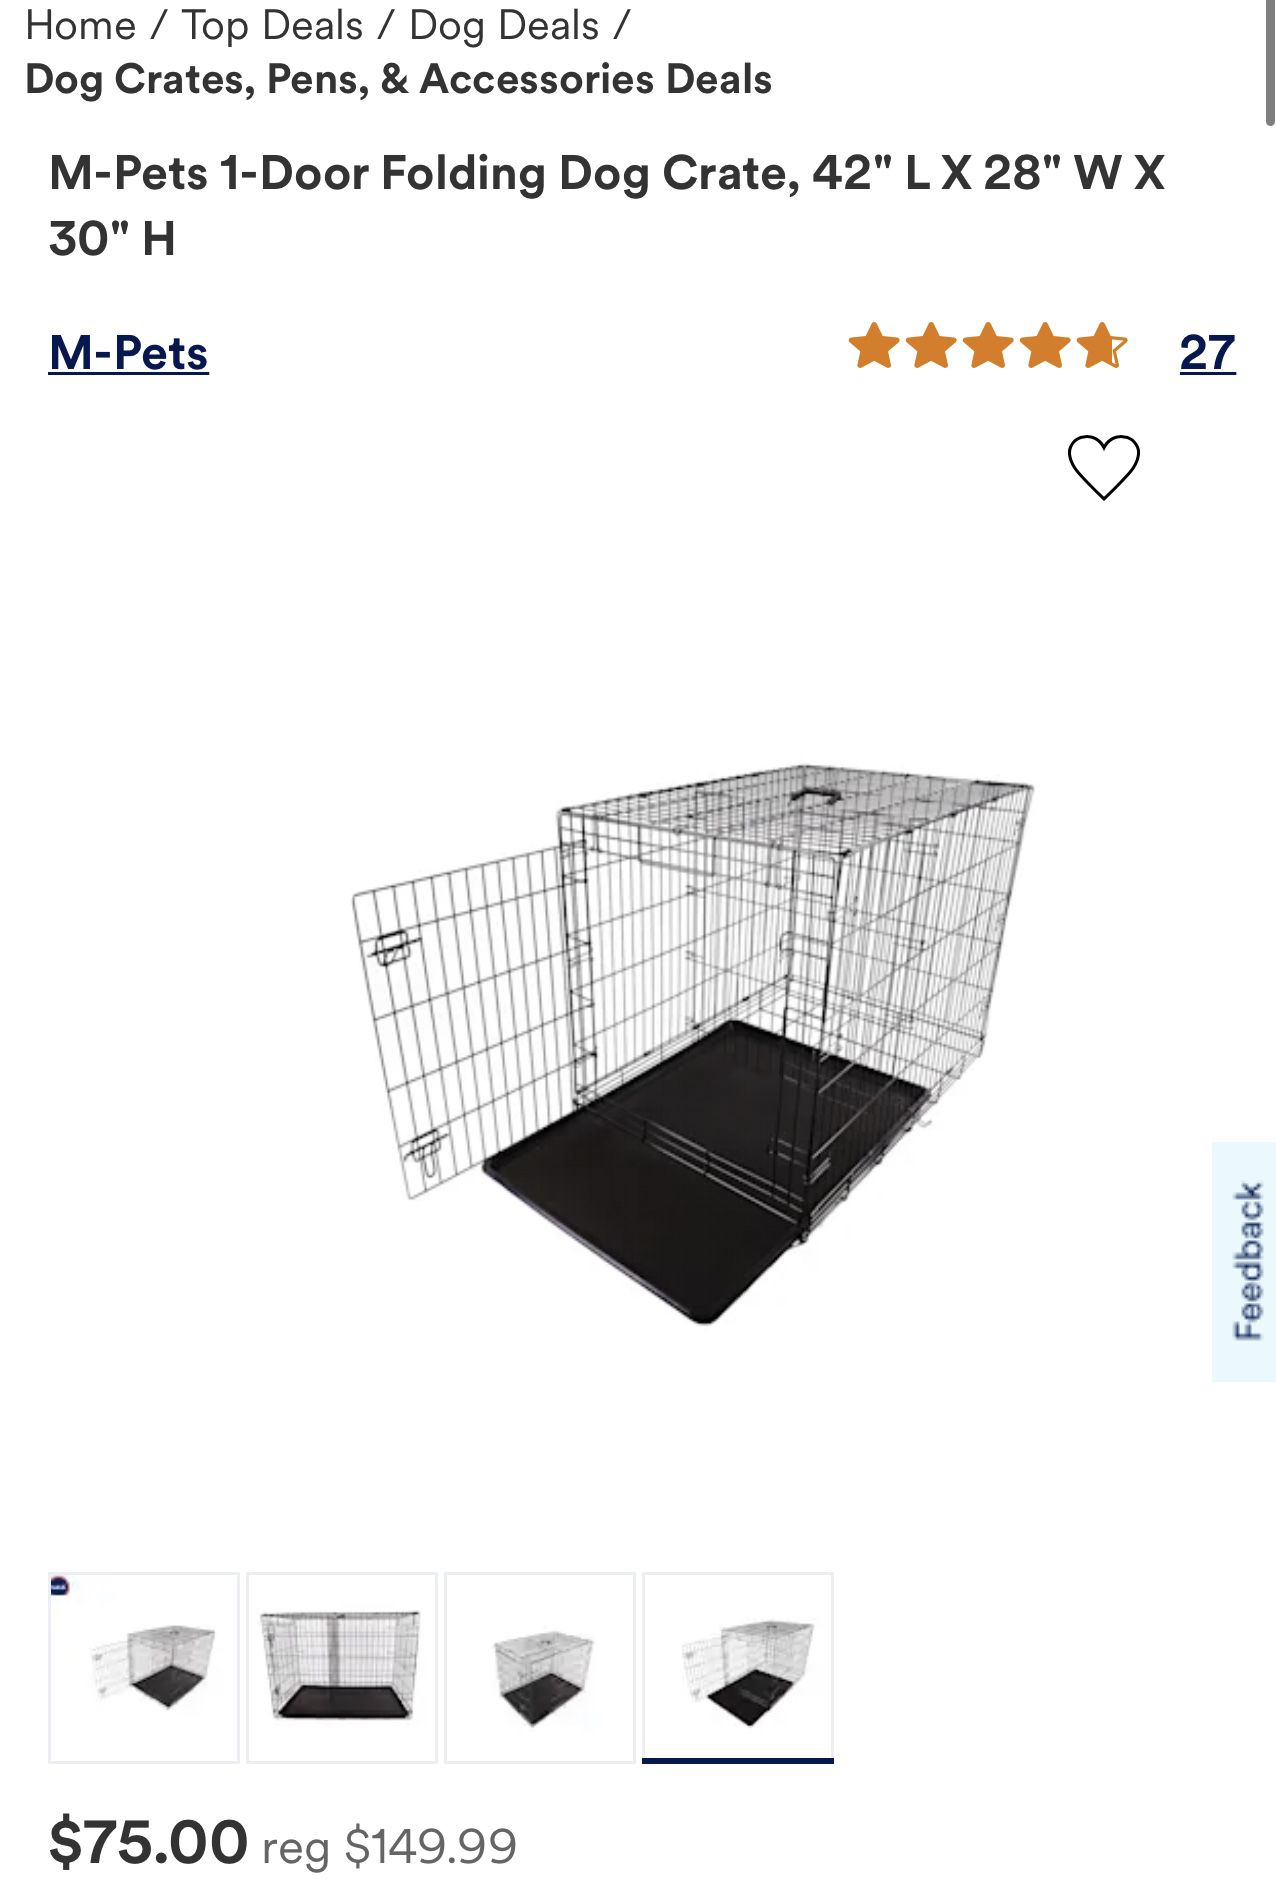 M-Pets 1-Door Folding Dog Crate, 42" L X 28" W X 30" H